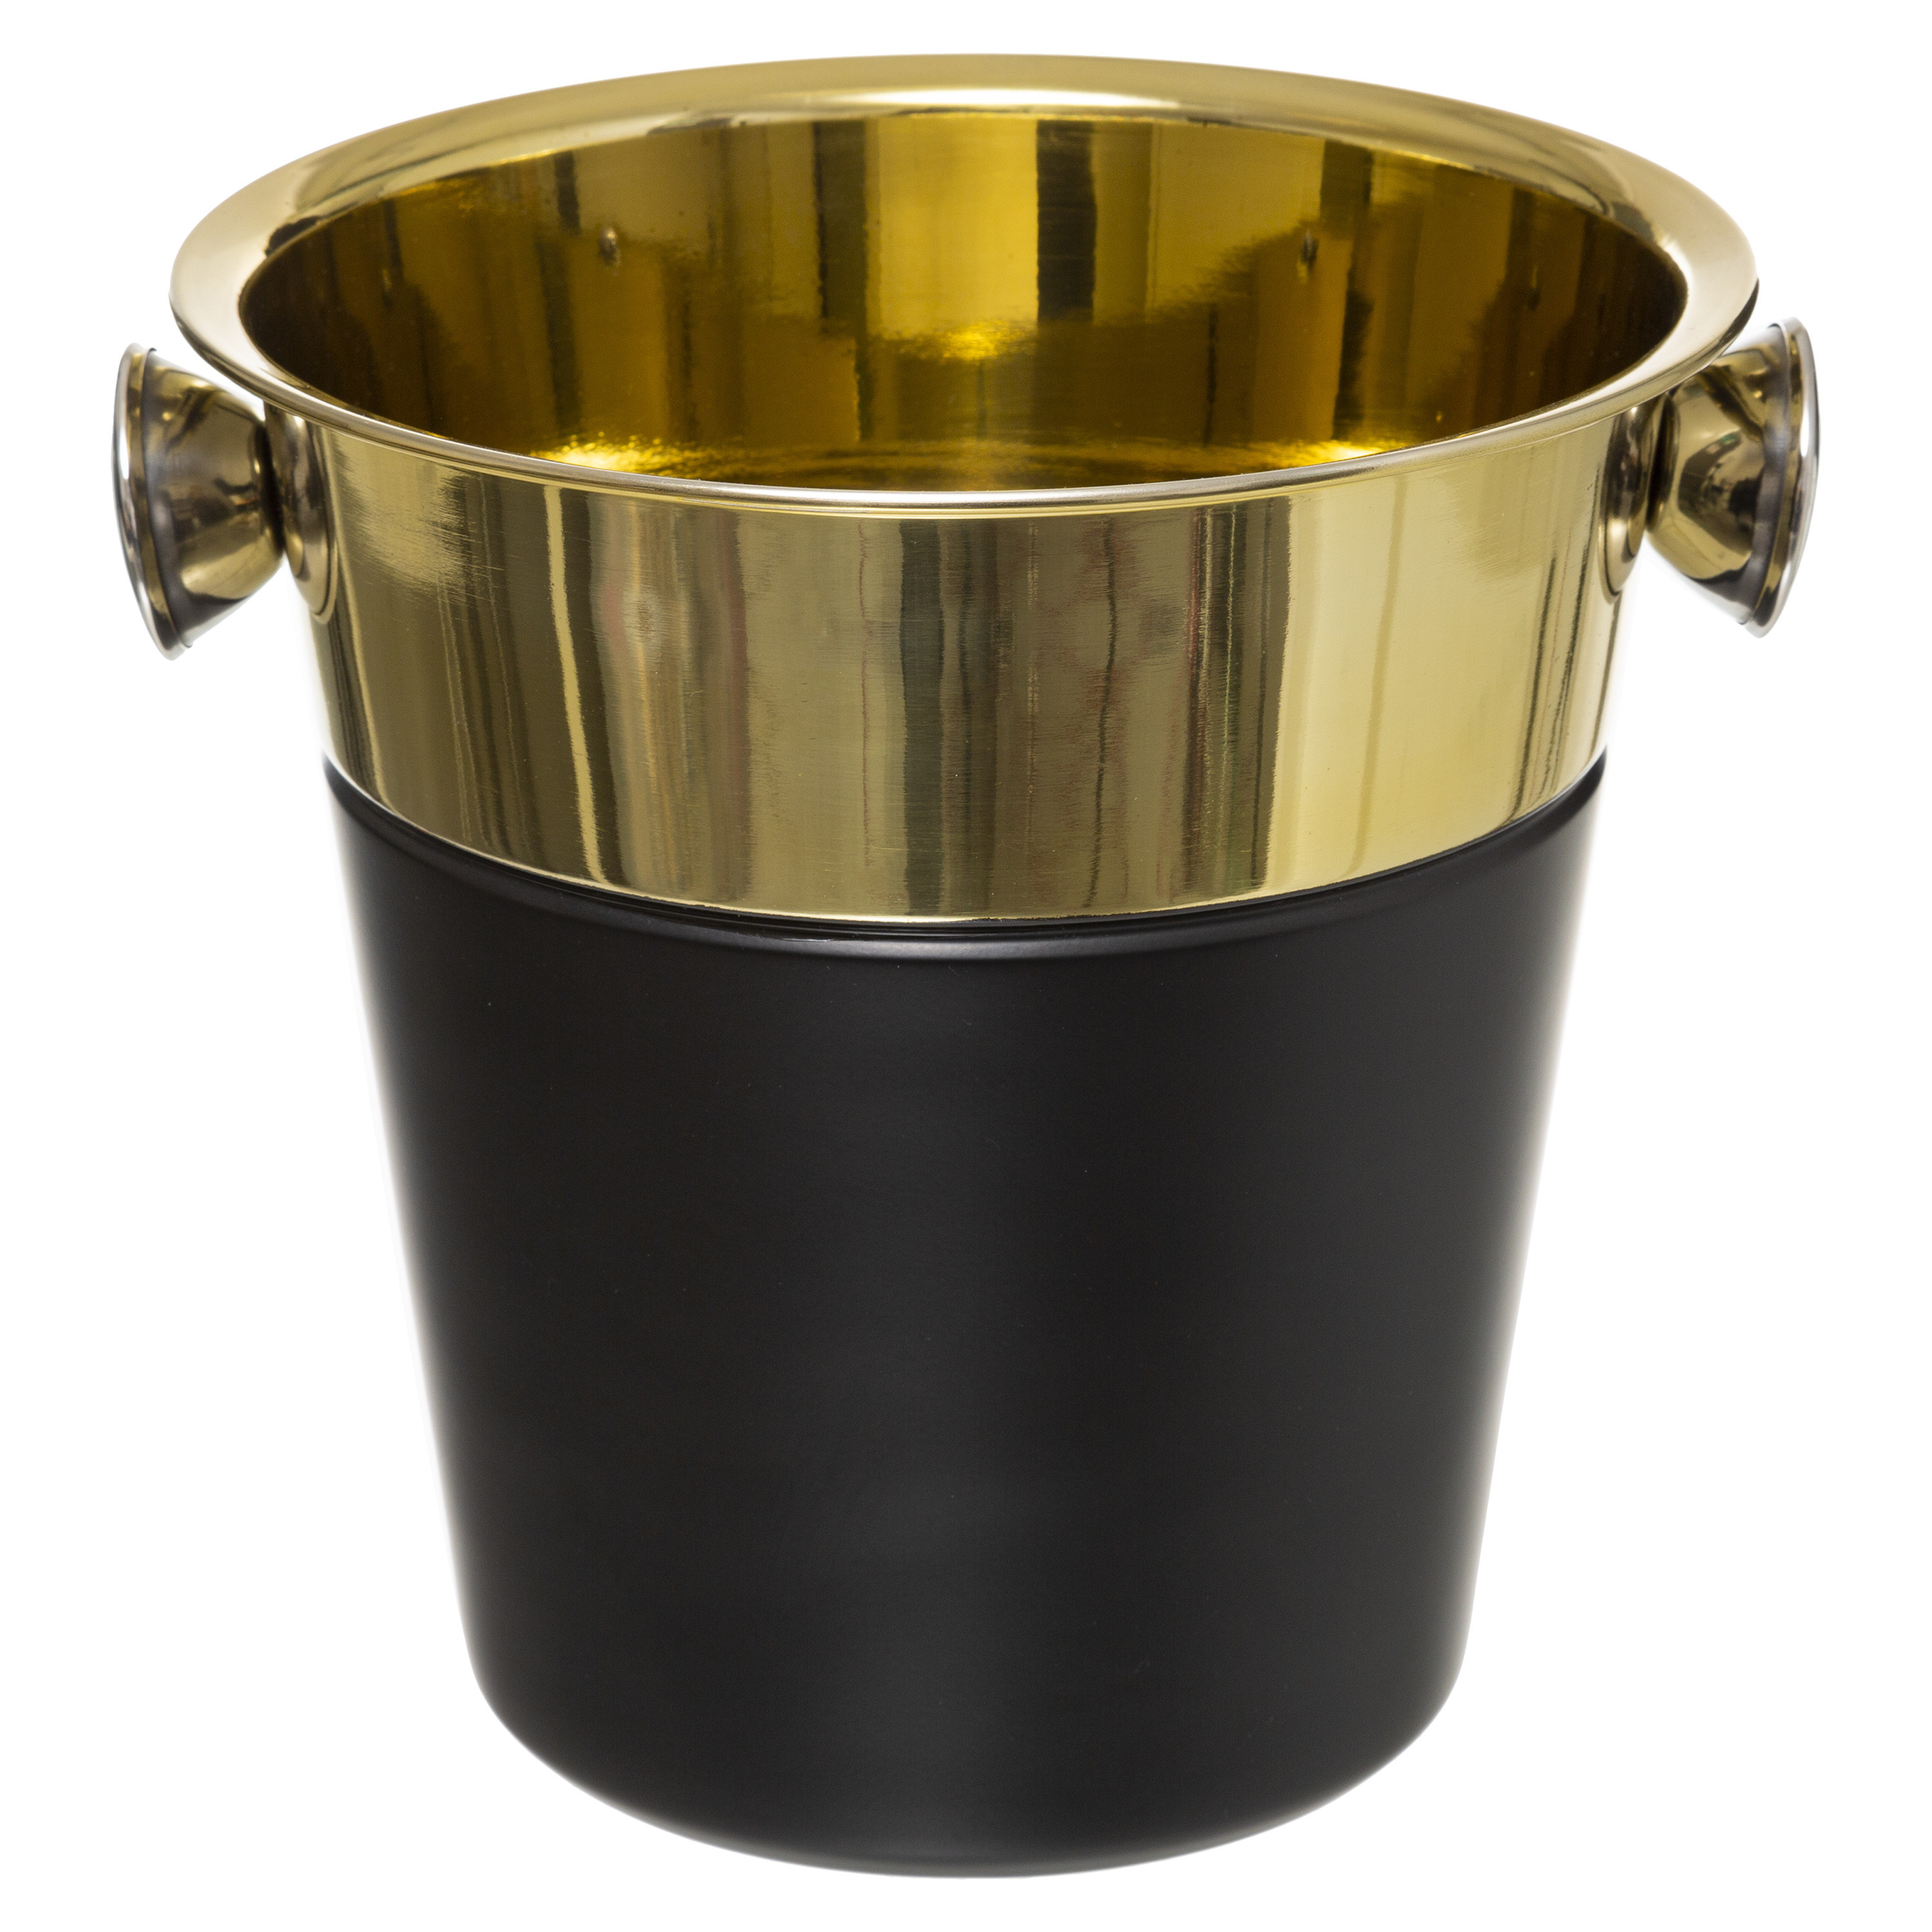 Champagnekoeler-ijsemmer zwart-goud 3 liter